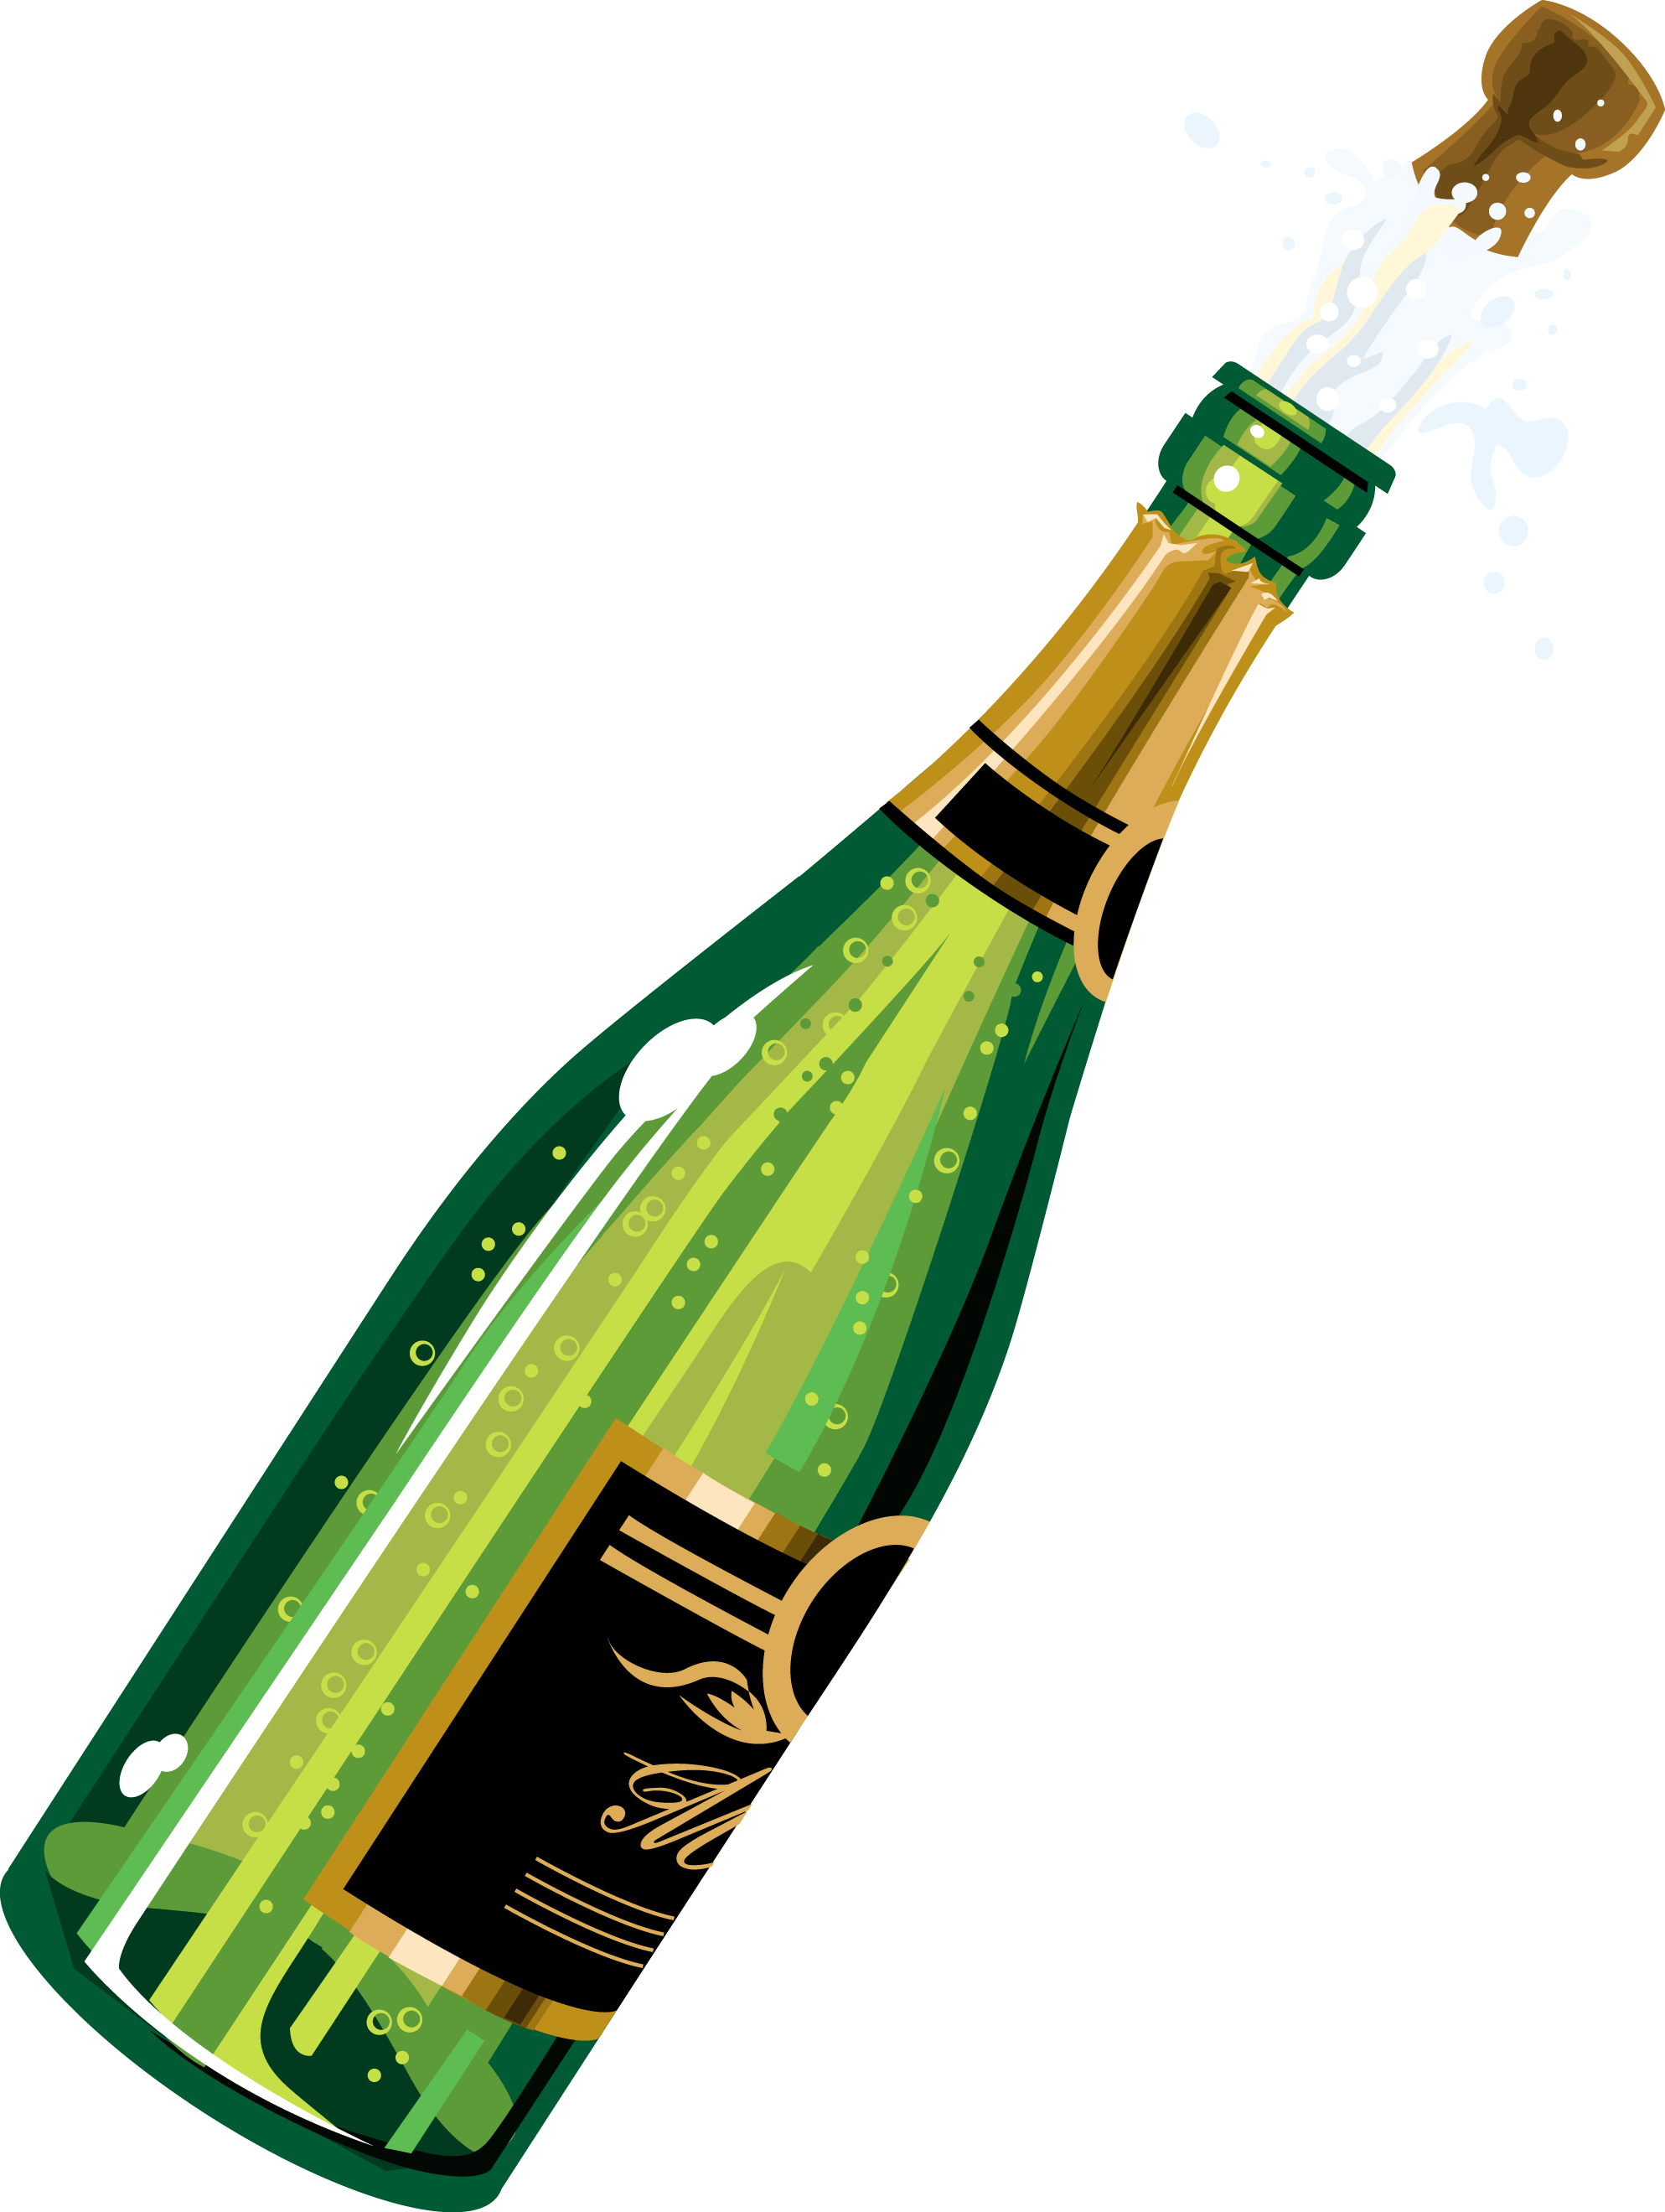 Champagne Bottle Clip Art